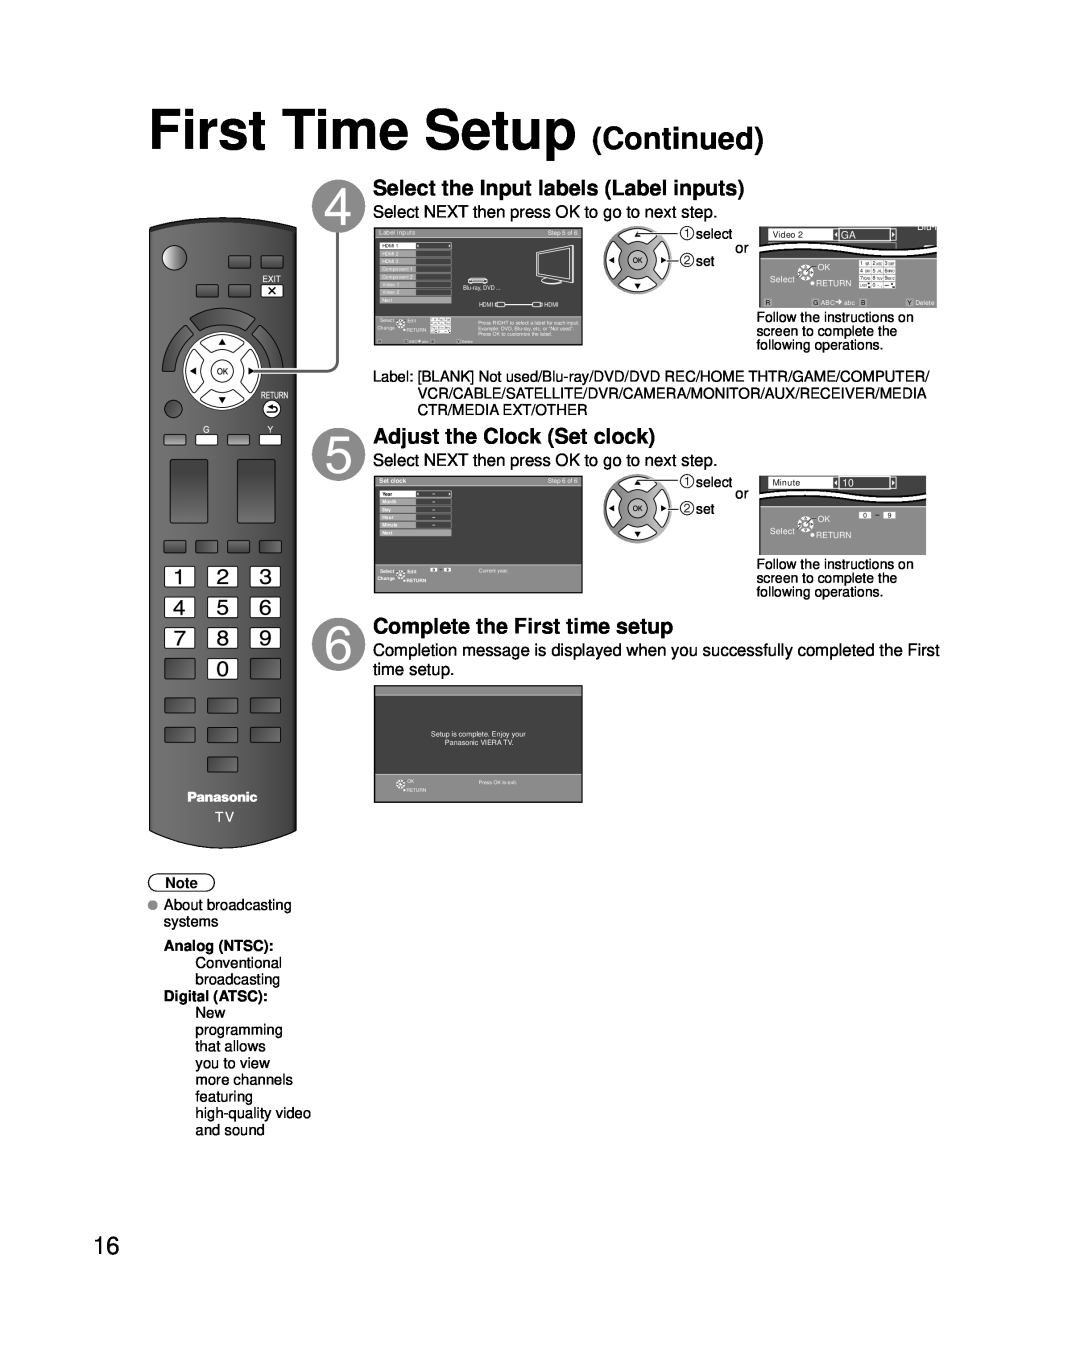 Panasonic TC-P42U2 First Time Setup Continued, Select the Input labels Label inputs, Adjust the Clock Set clock, select 